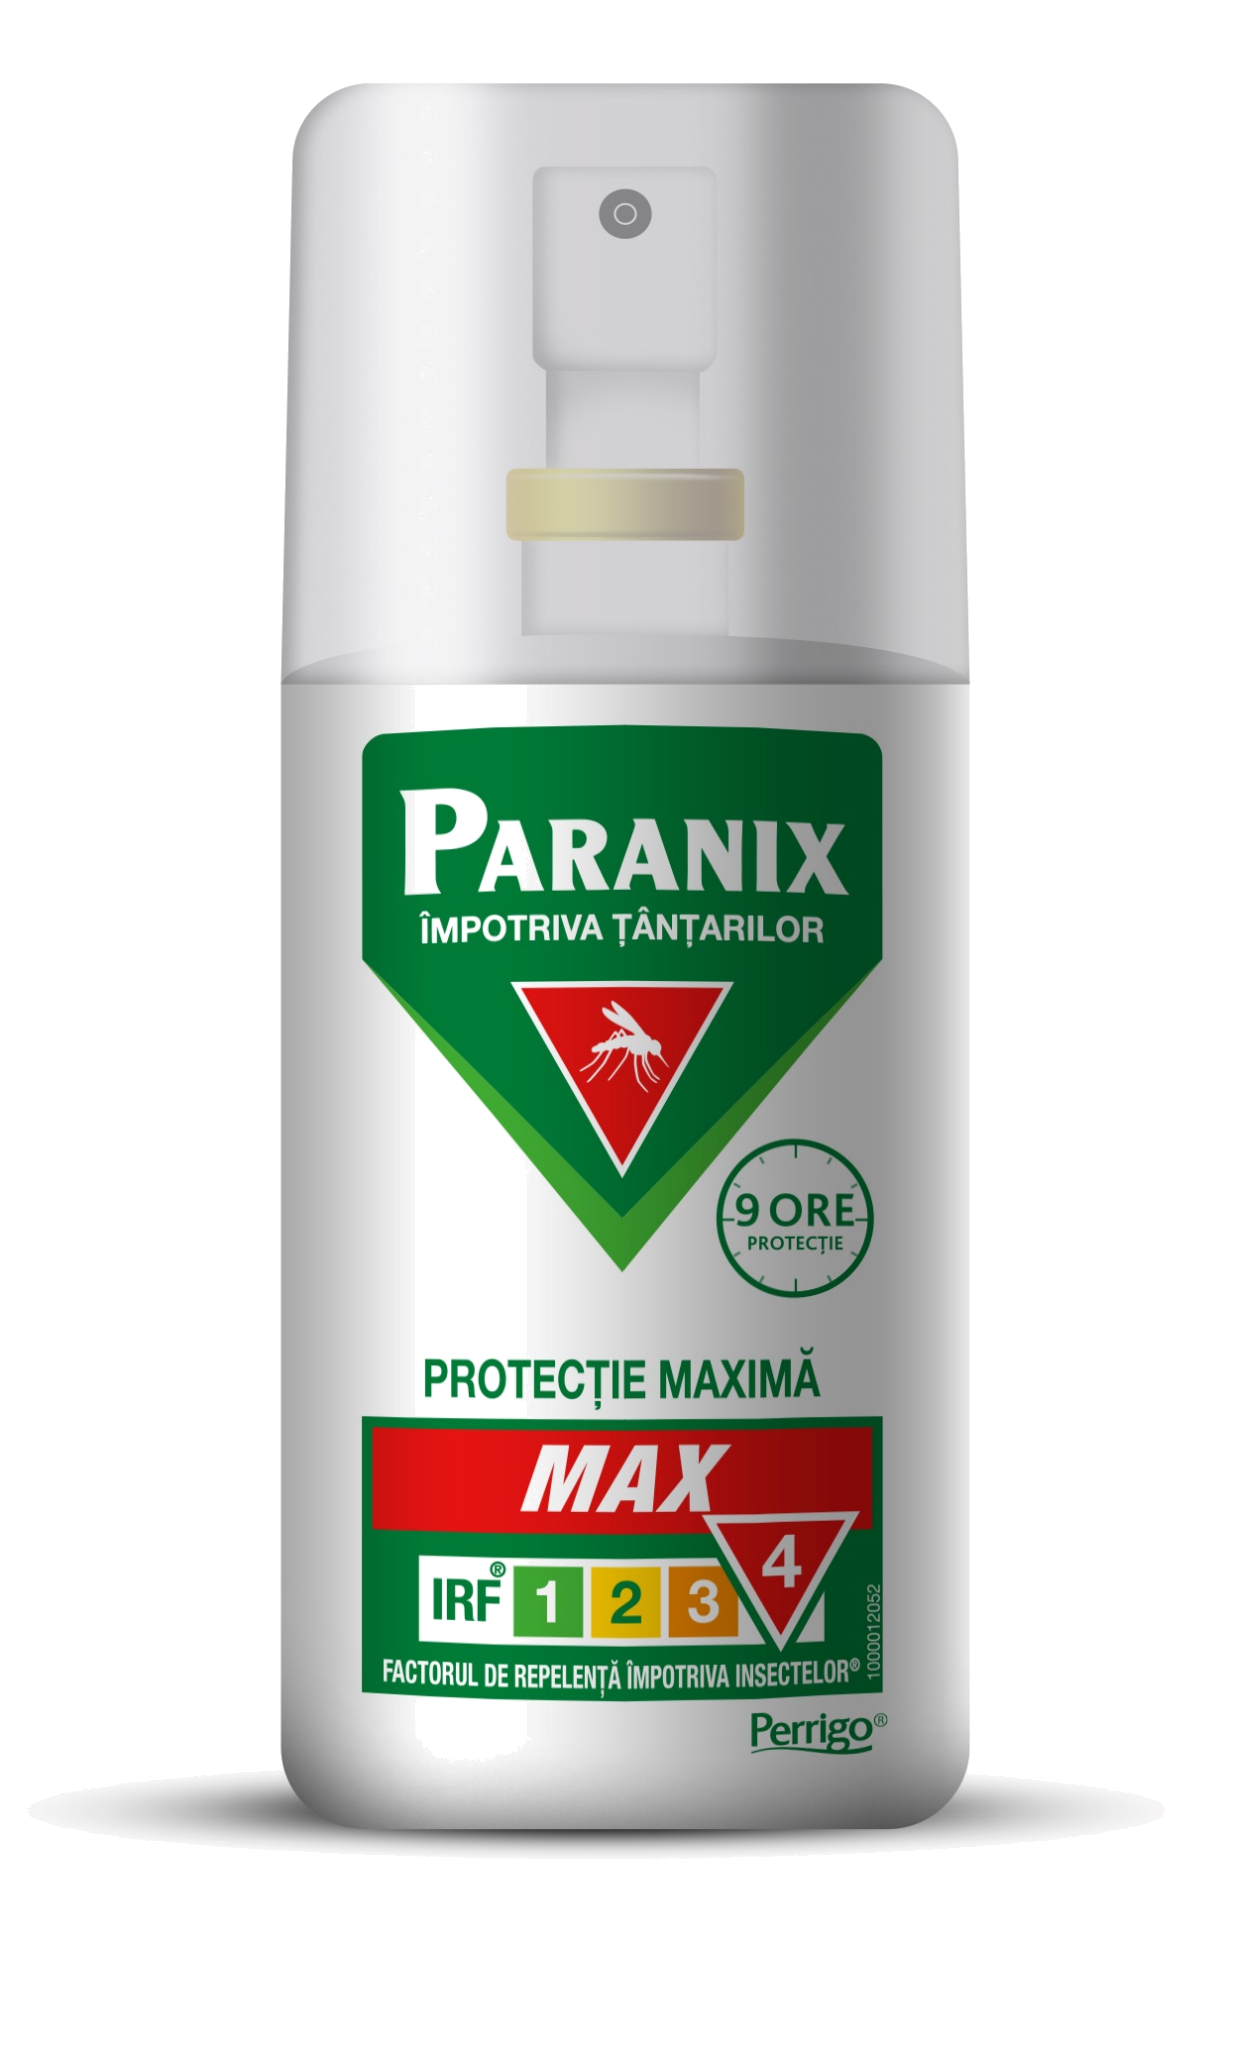 Paranix Max spray impotriva tantarilor x 75ml